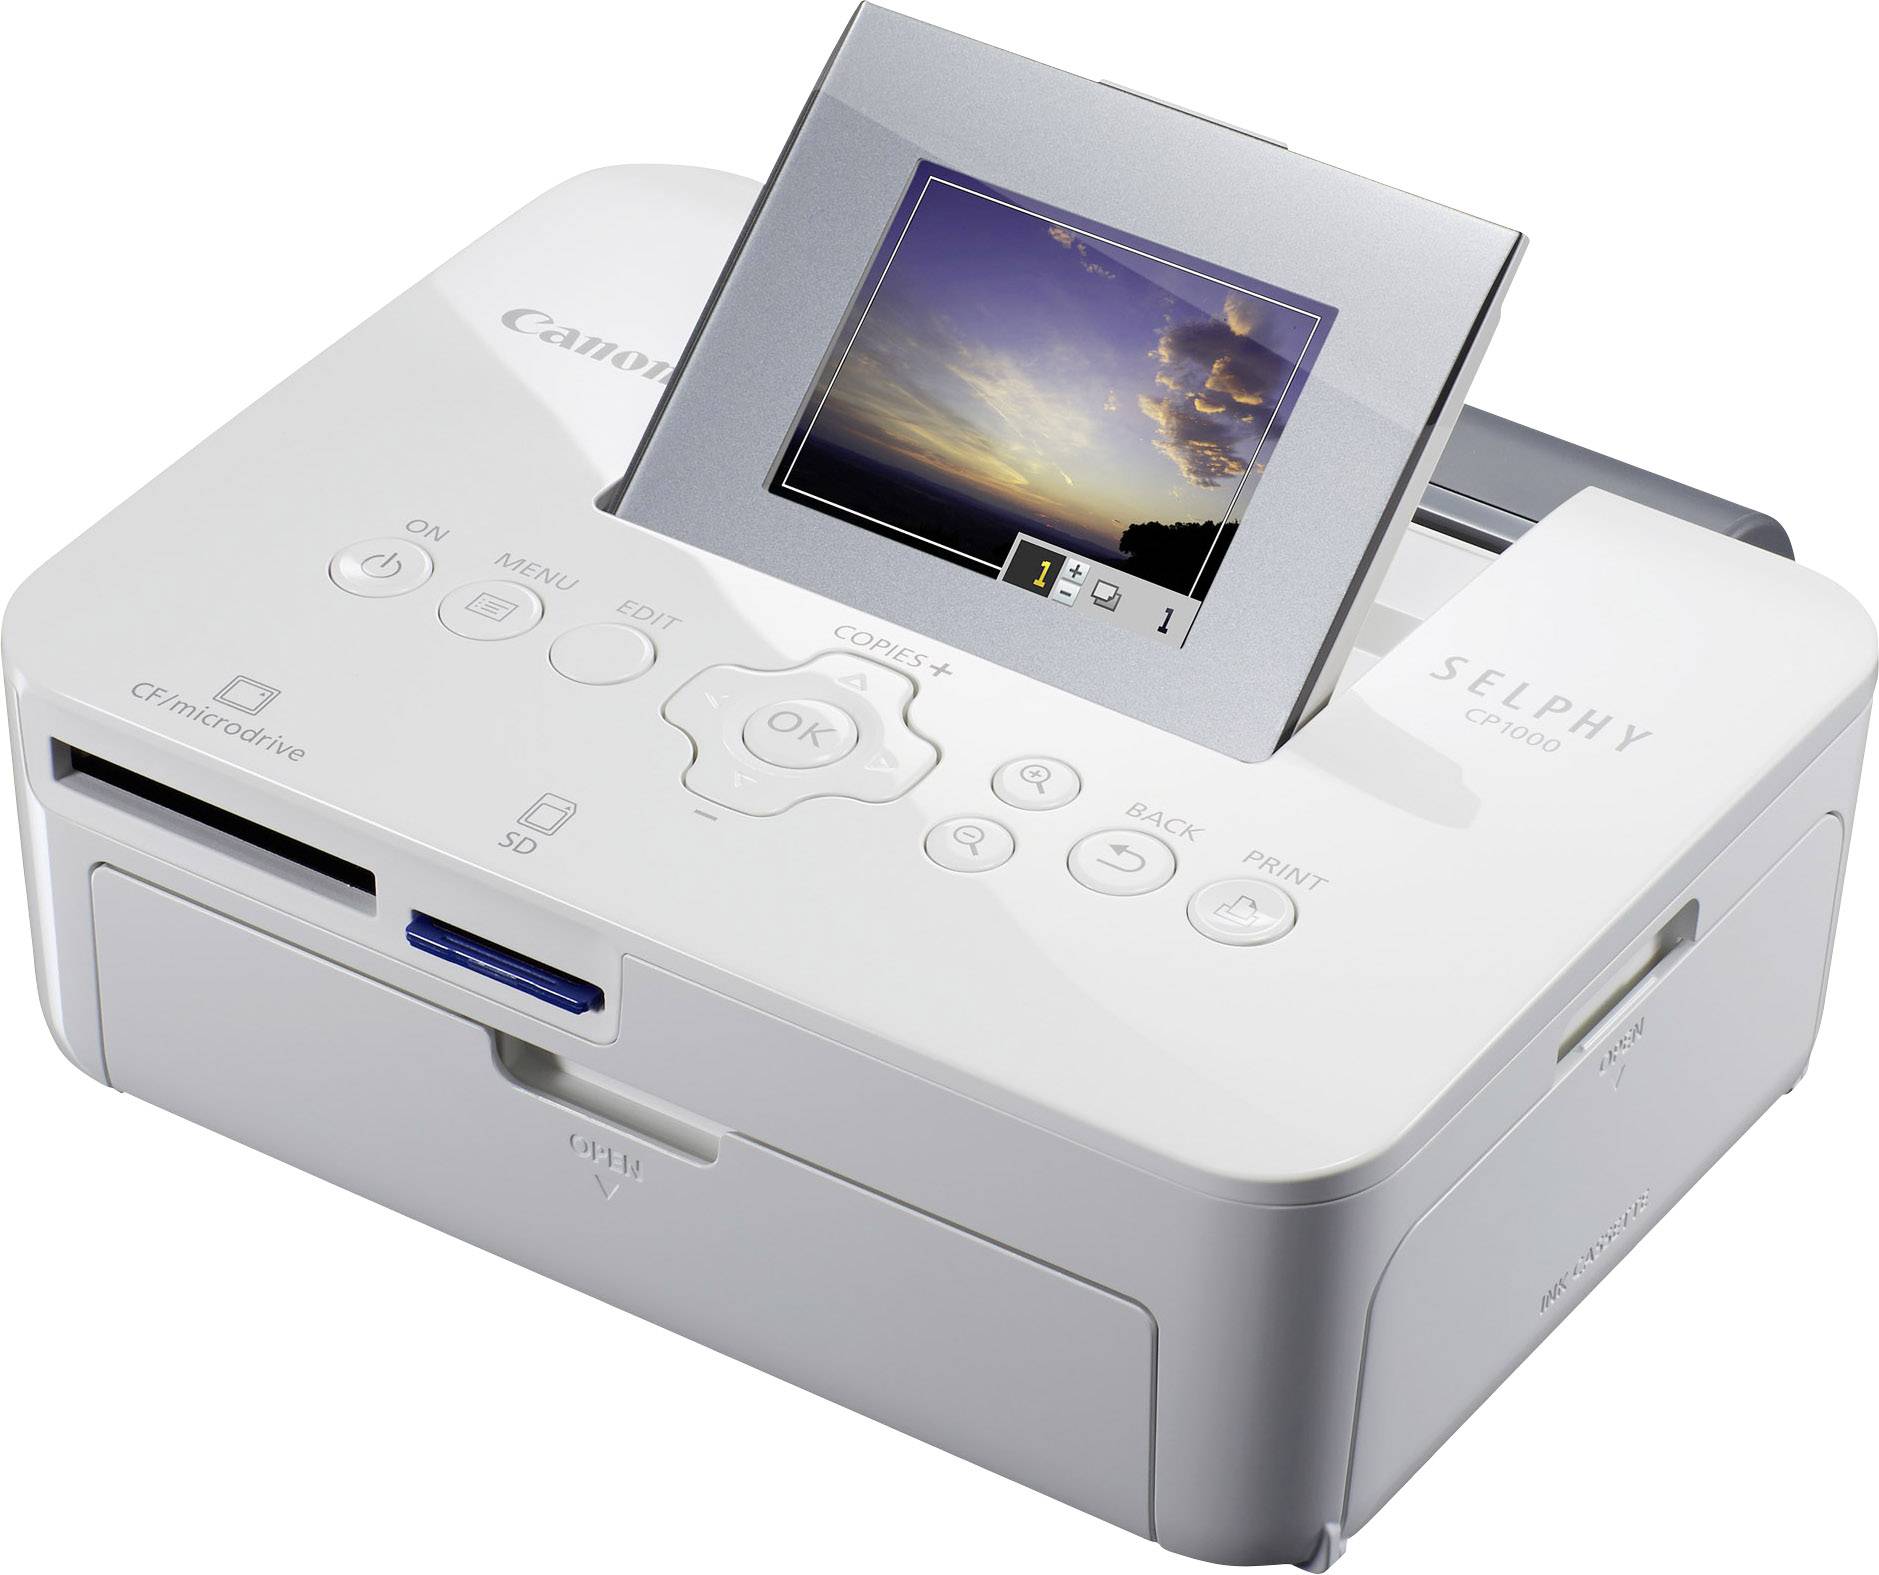 Photo Printer Canon Selphy Cp1000 Print Resolution 300 X 300 Dpi Paper Size Max 148 X 100 2652